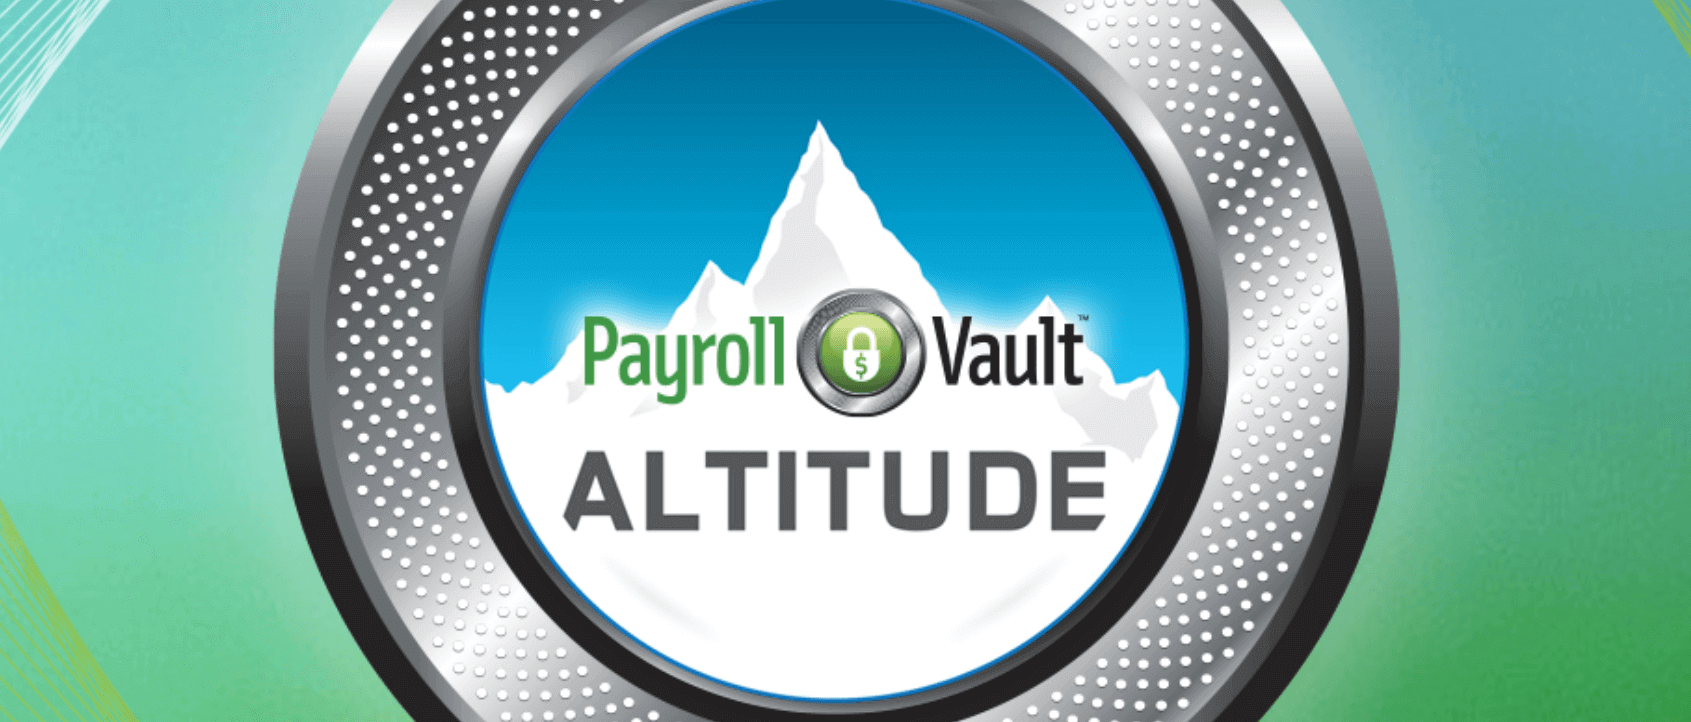 Payroll Vault Altitude 2022 Event Logo